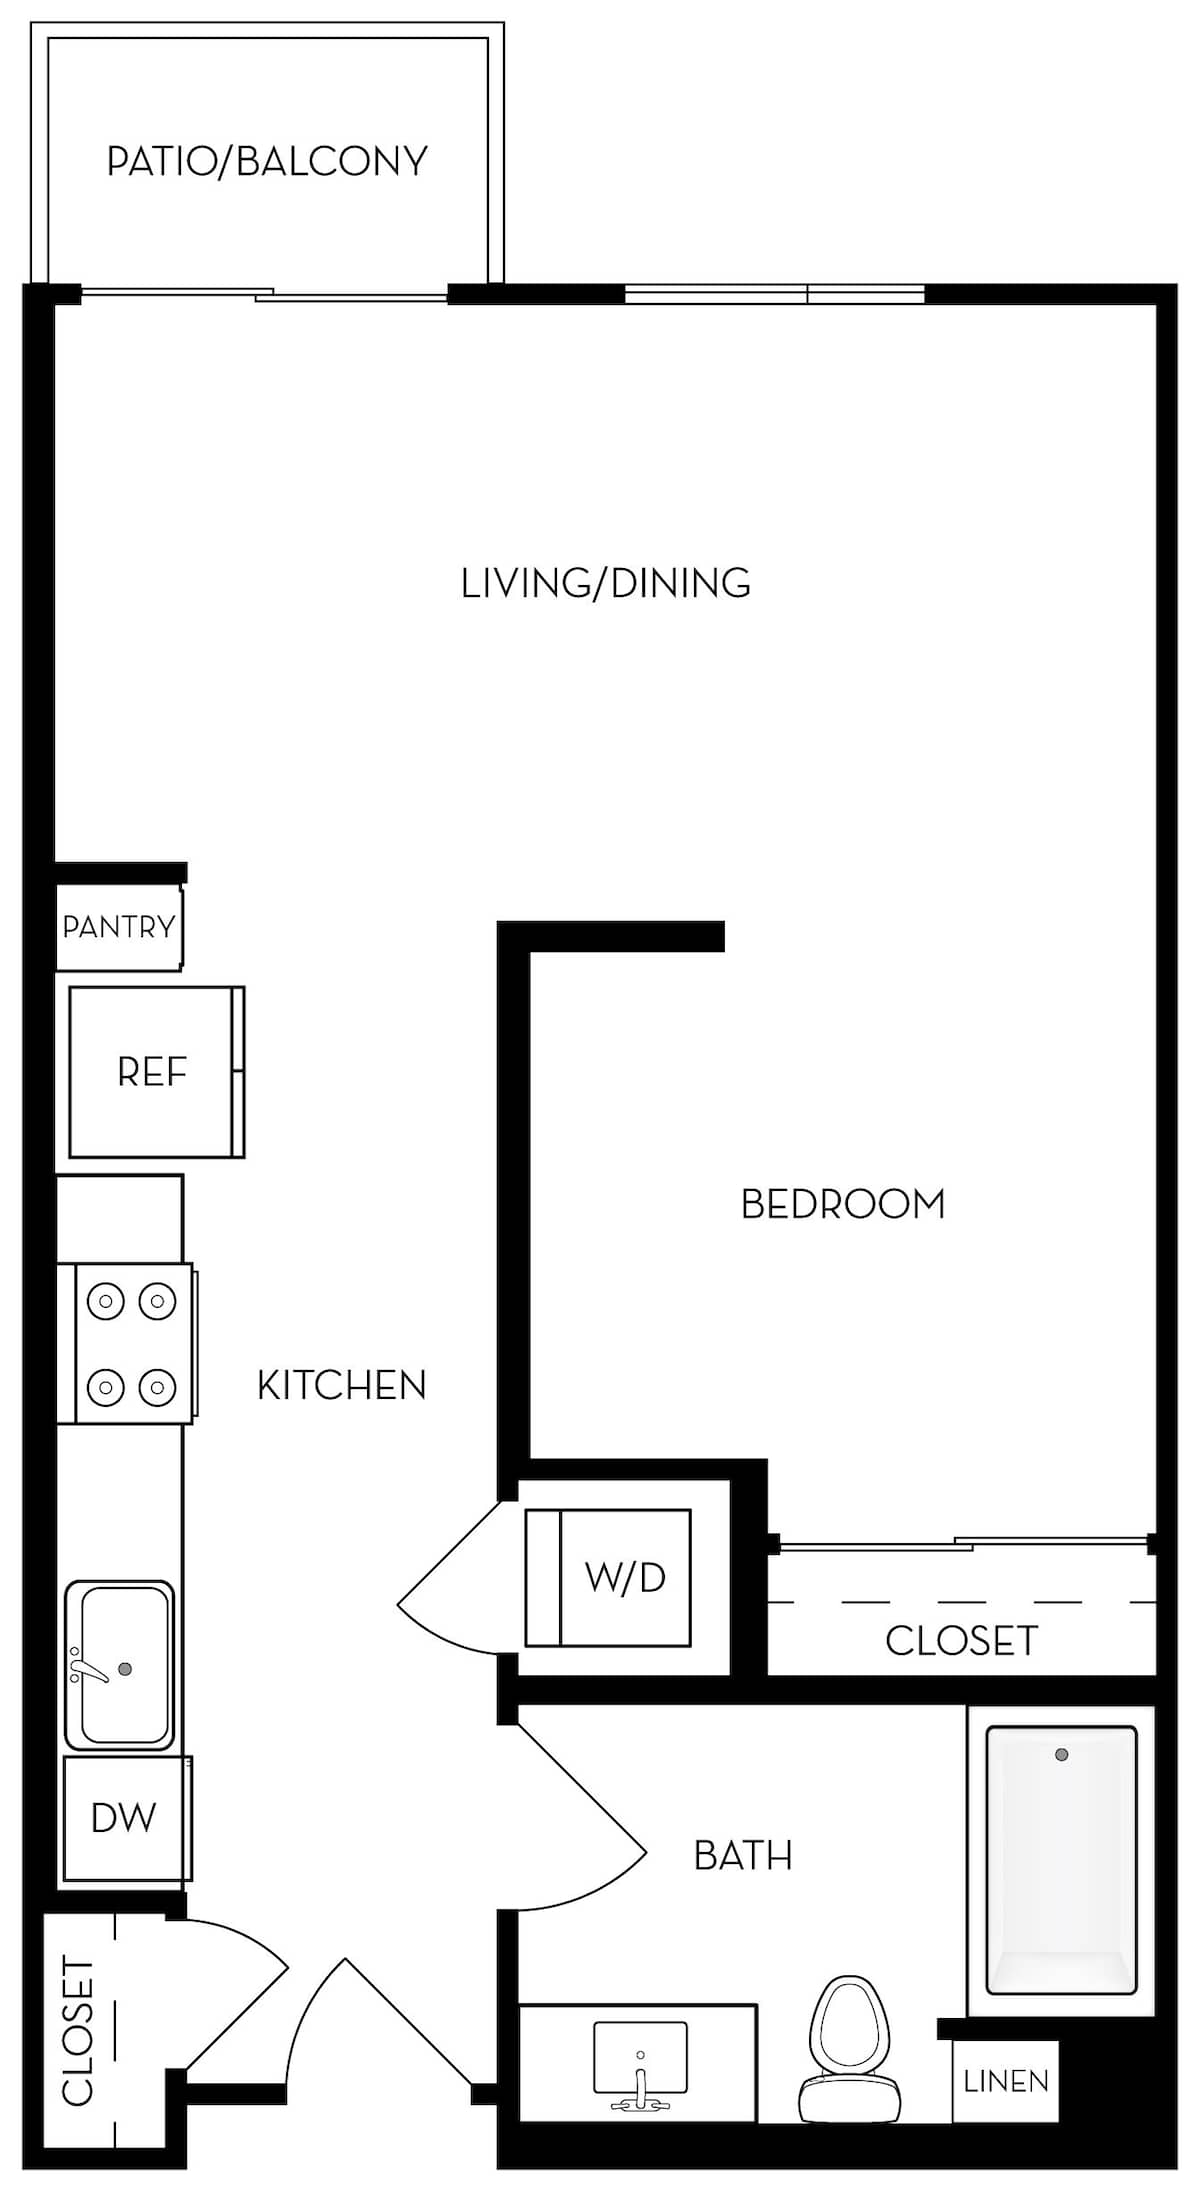 Floorplan diagram for E1 - Junior 1BR 1BA Flat, showing 1 bedroom